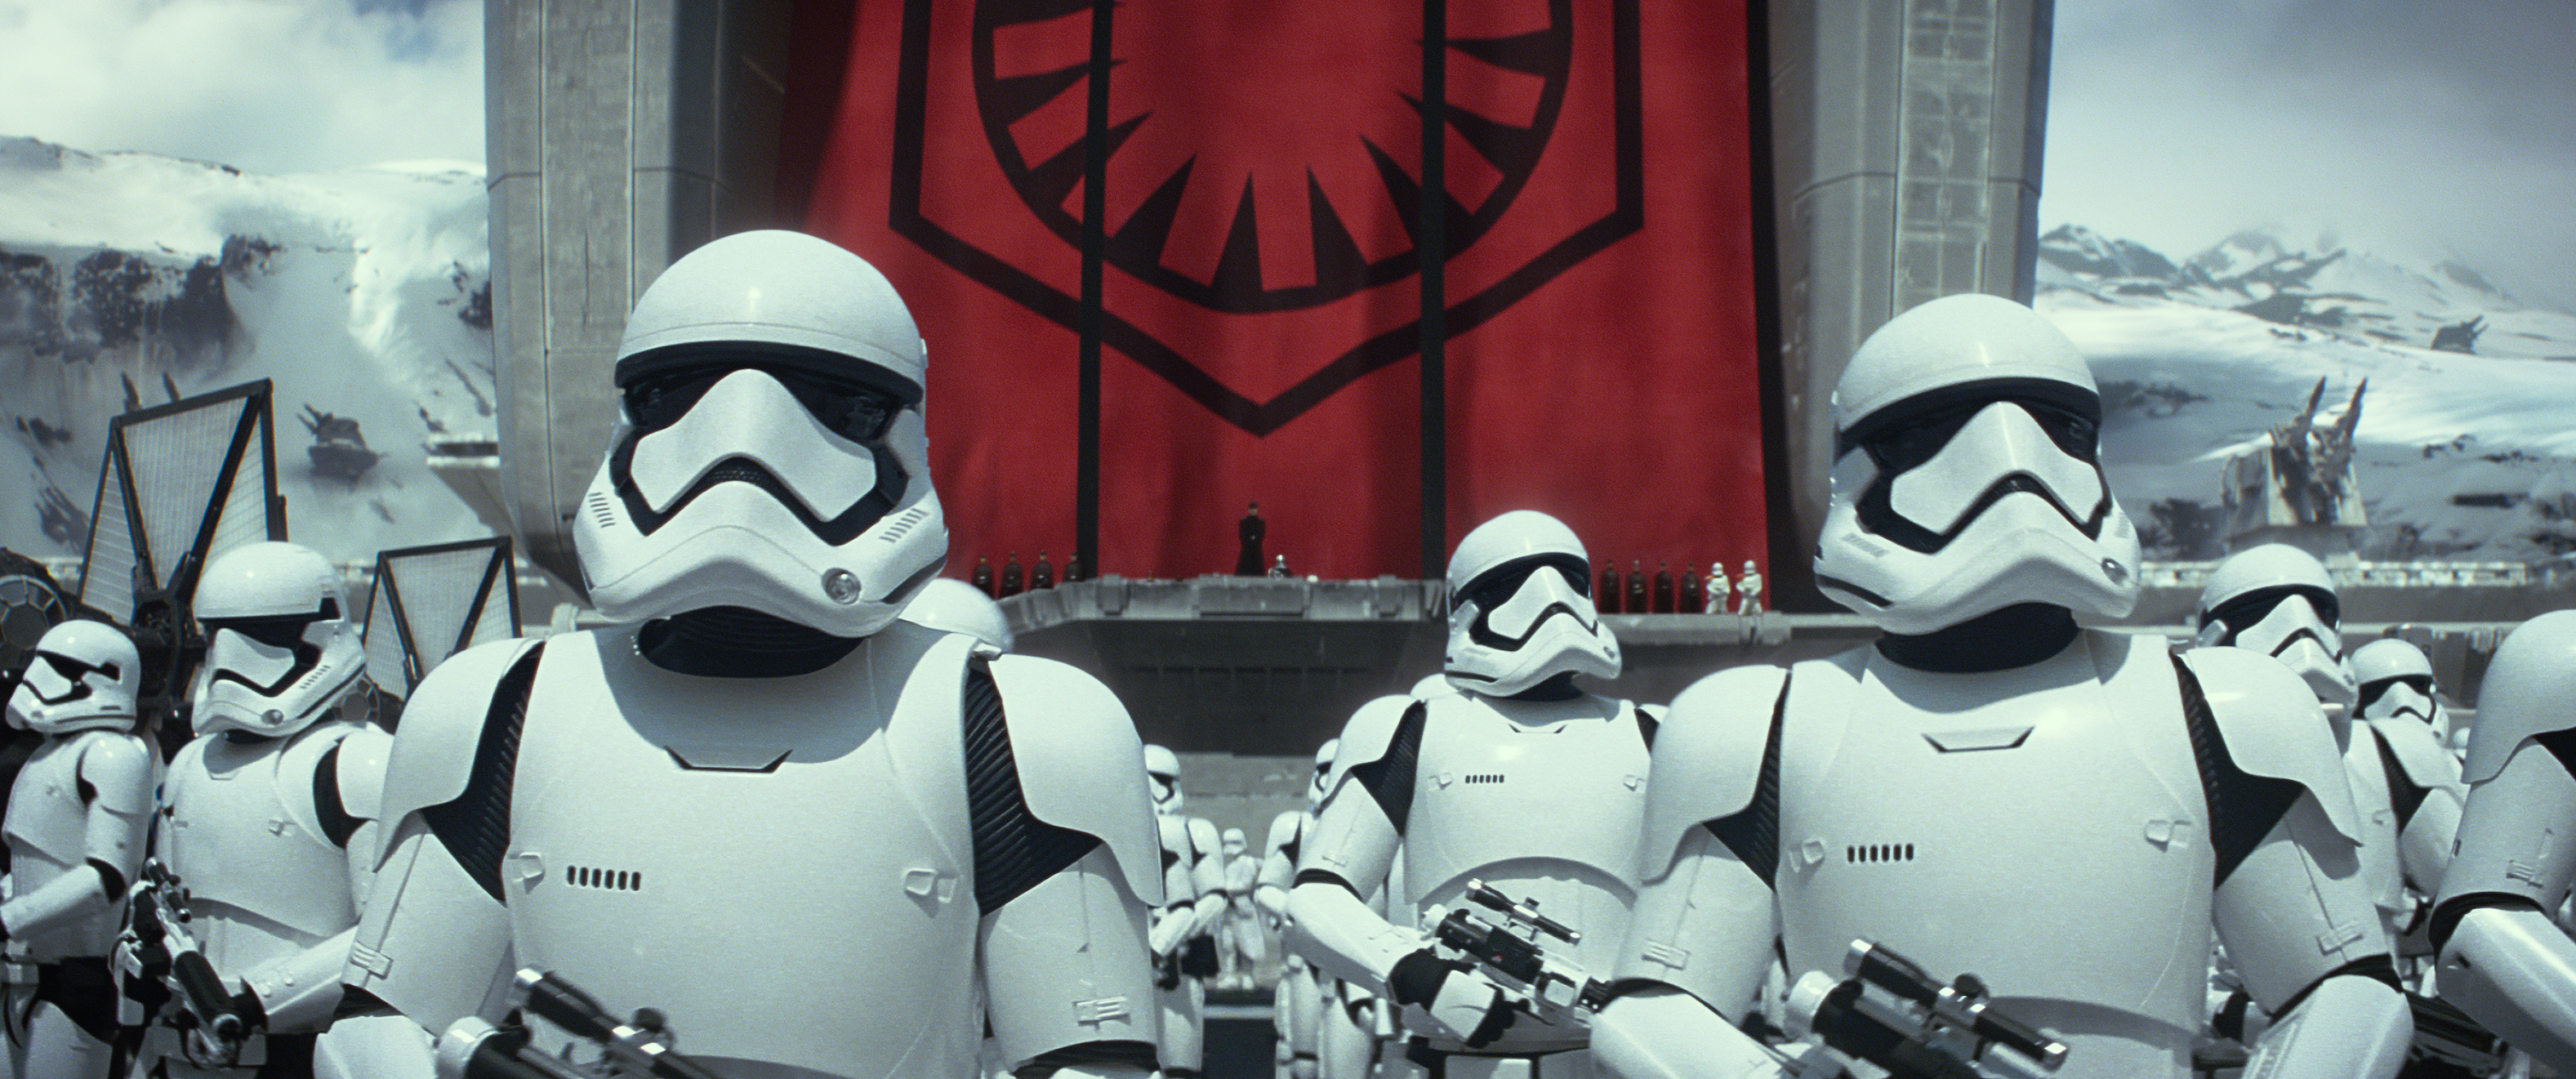 Star Wars Star Wars Episode Vii The Force Awakens Stormtrooper 3154x1321